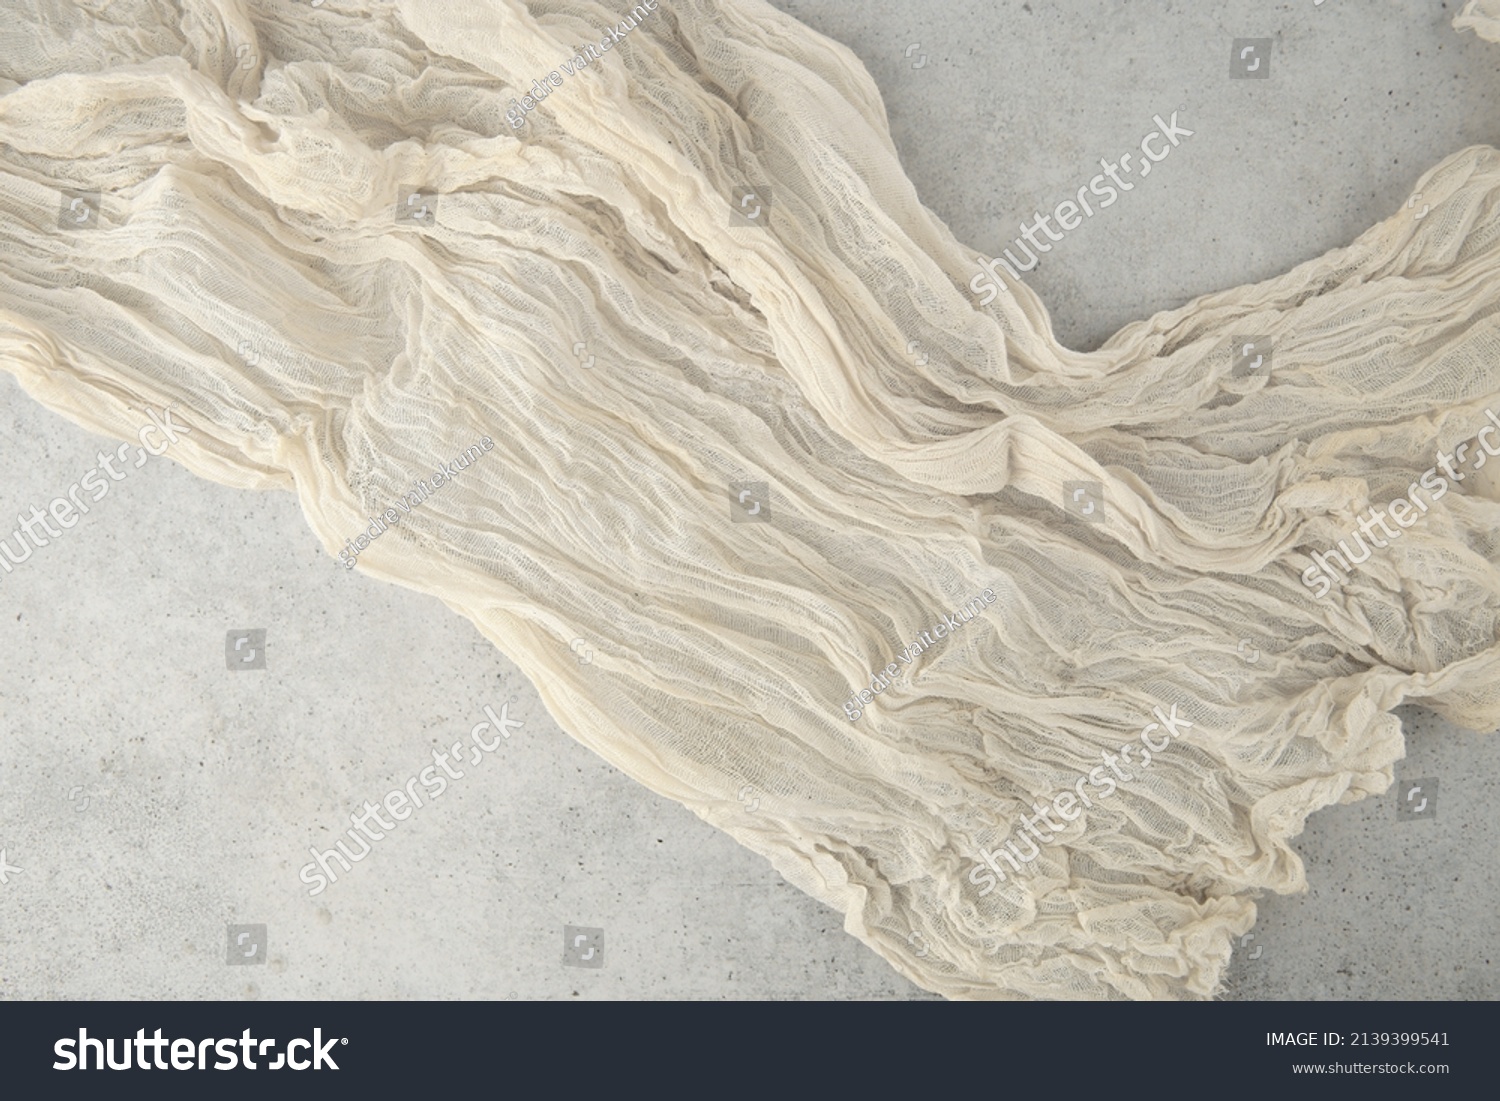 Wrinkled gauze fabric on light grunge stone background. Cotton gauze fabric cloth on stone tile surface with copy space. #2139399541